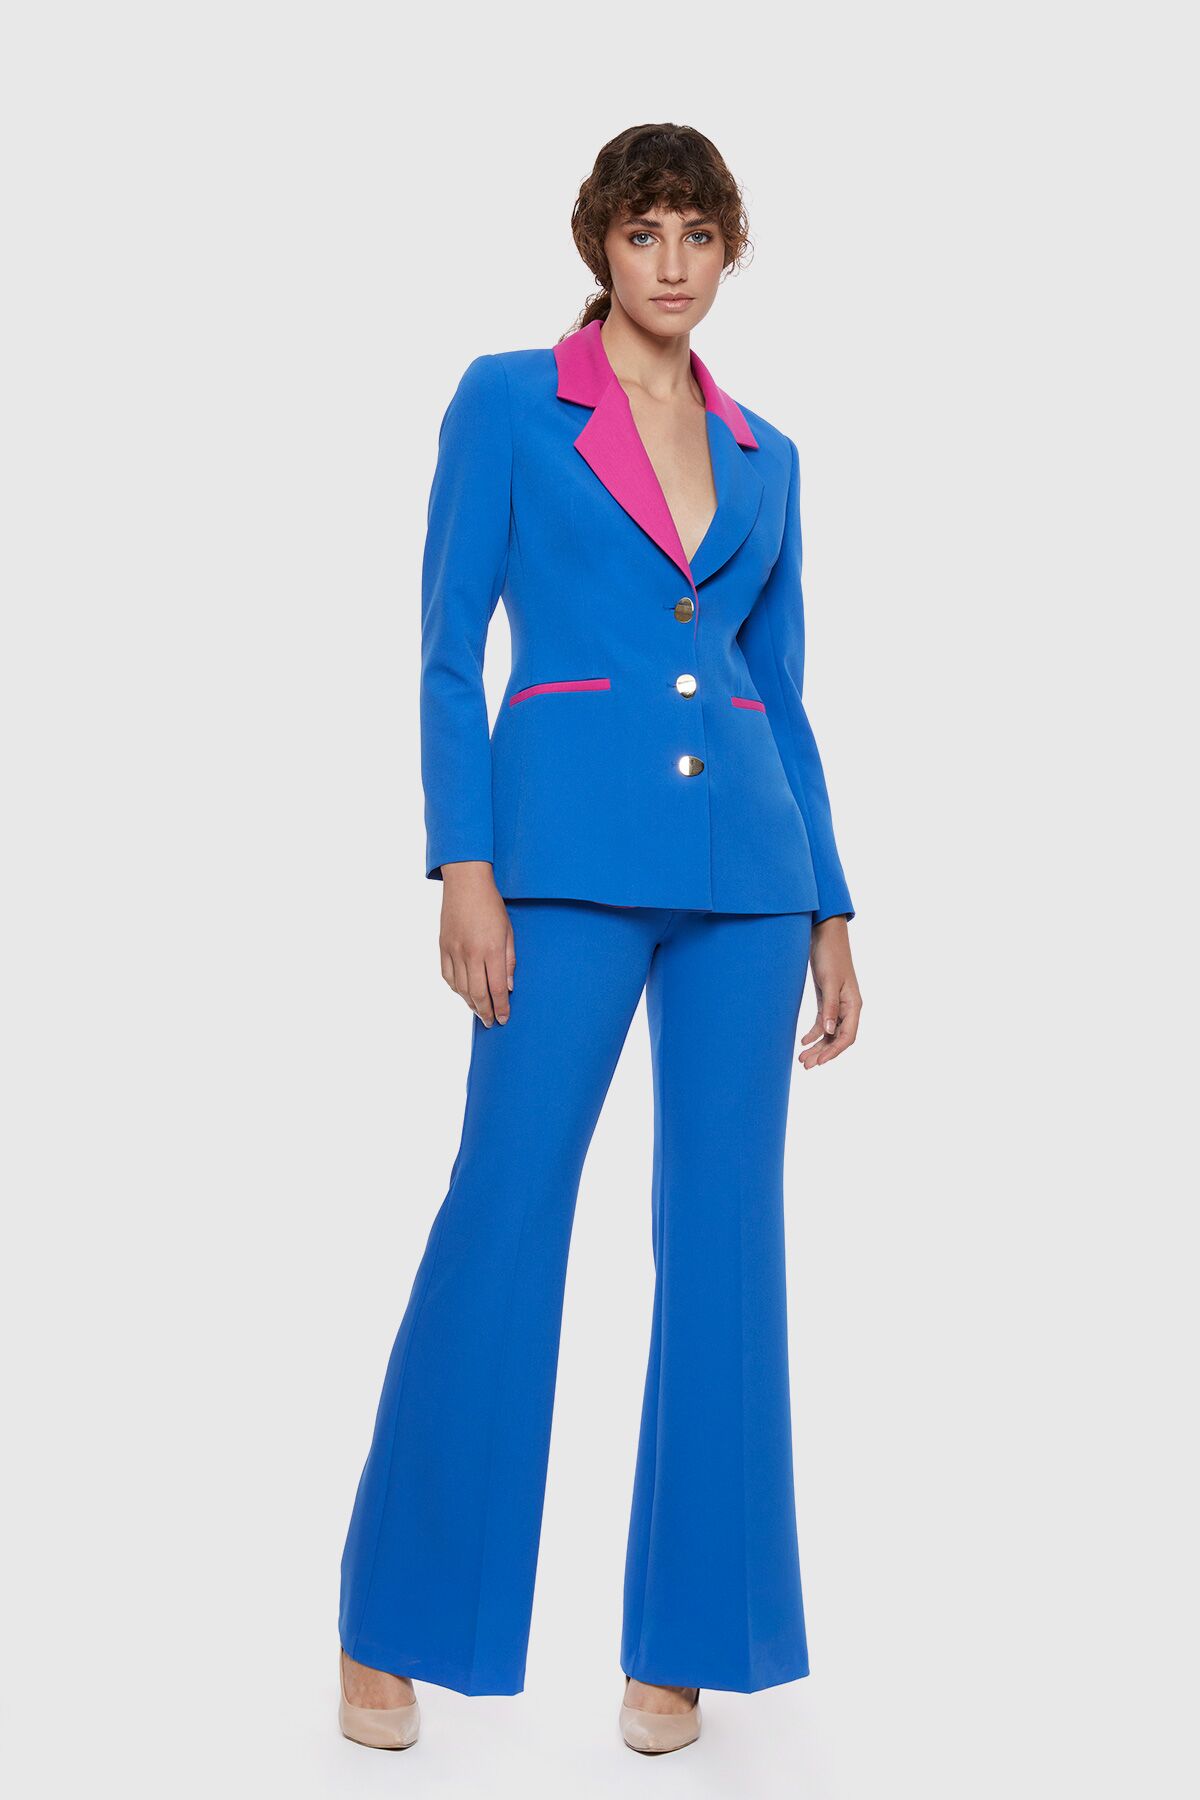 4G CLASSIC - Contrast Collar Blue Suit